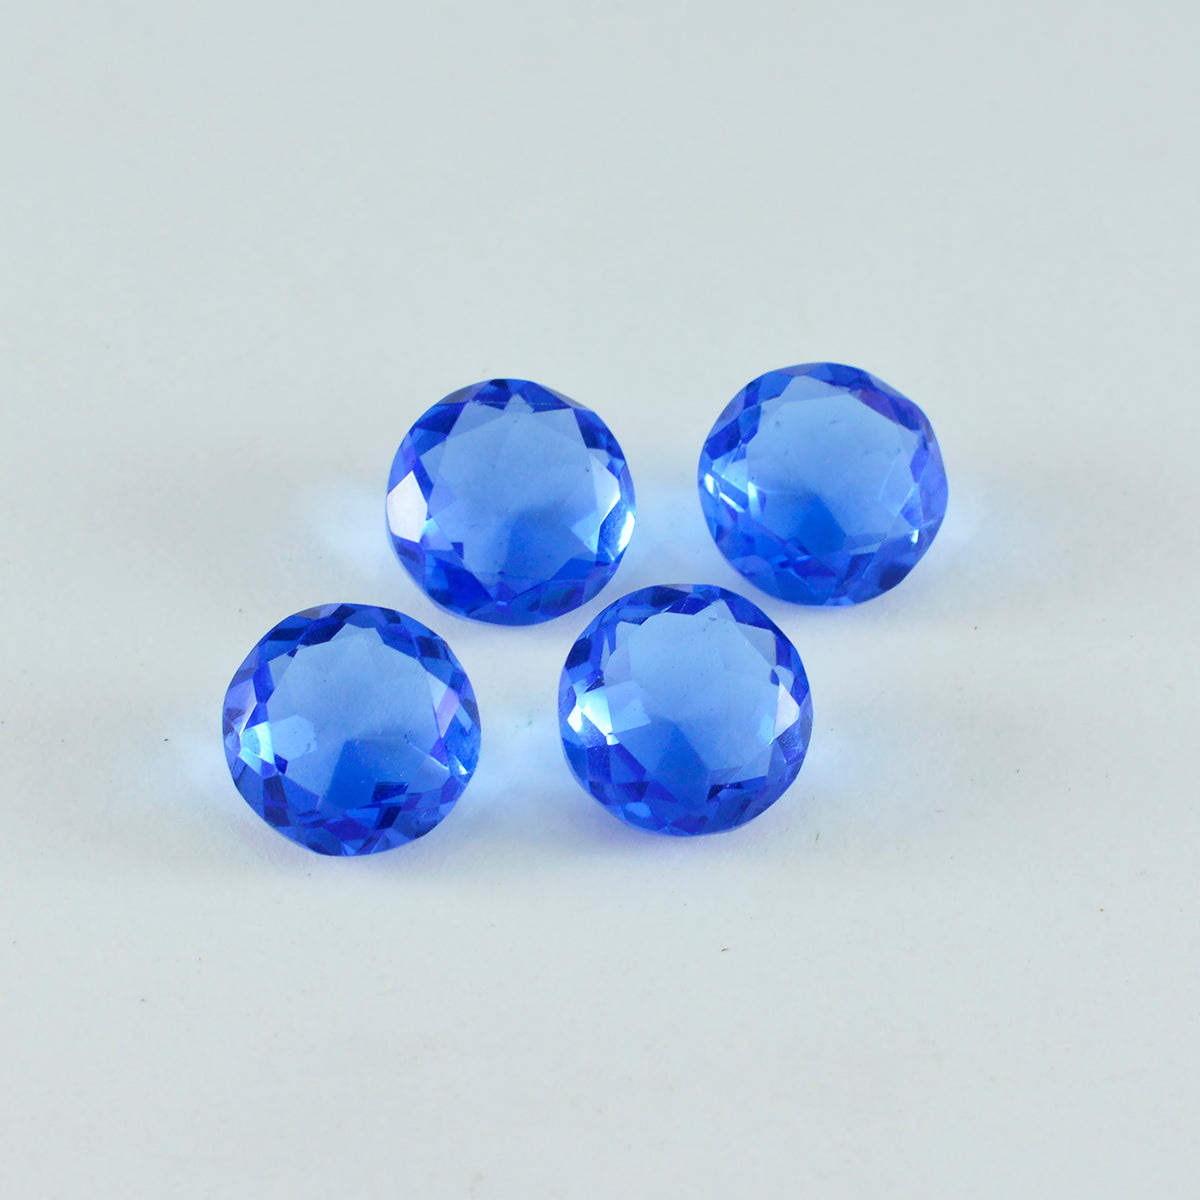 Riyogems 1PC Blue Sapphire CZ Faceted 10x10 mm Round Shape amazing Quality Loose Gemstone